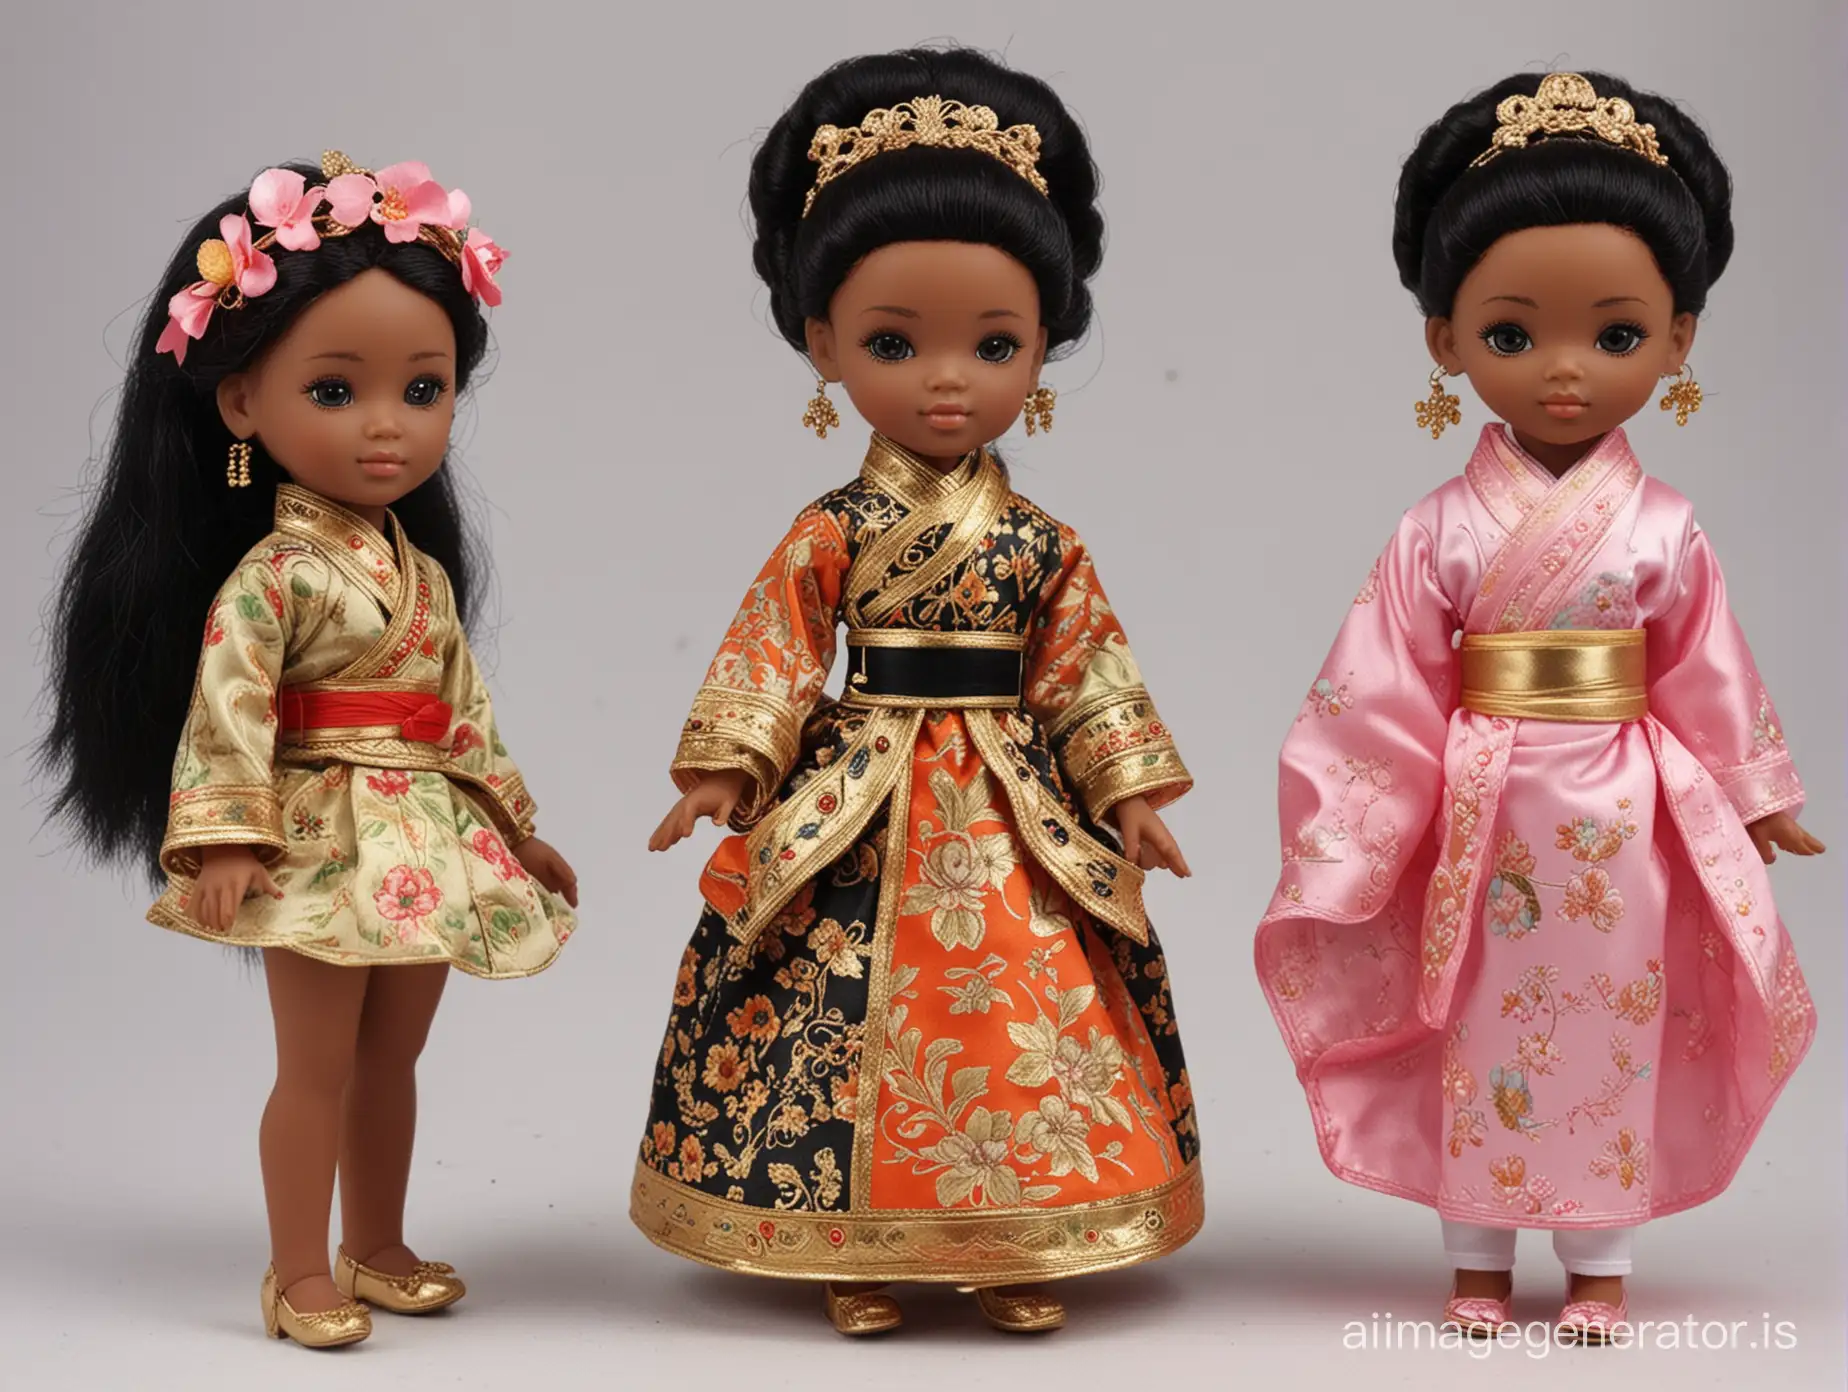 oriental dolls and dolls with black skin